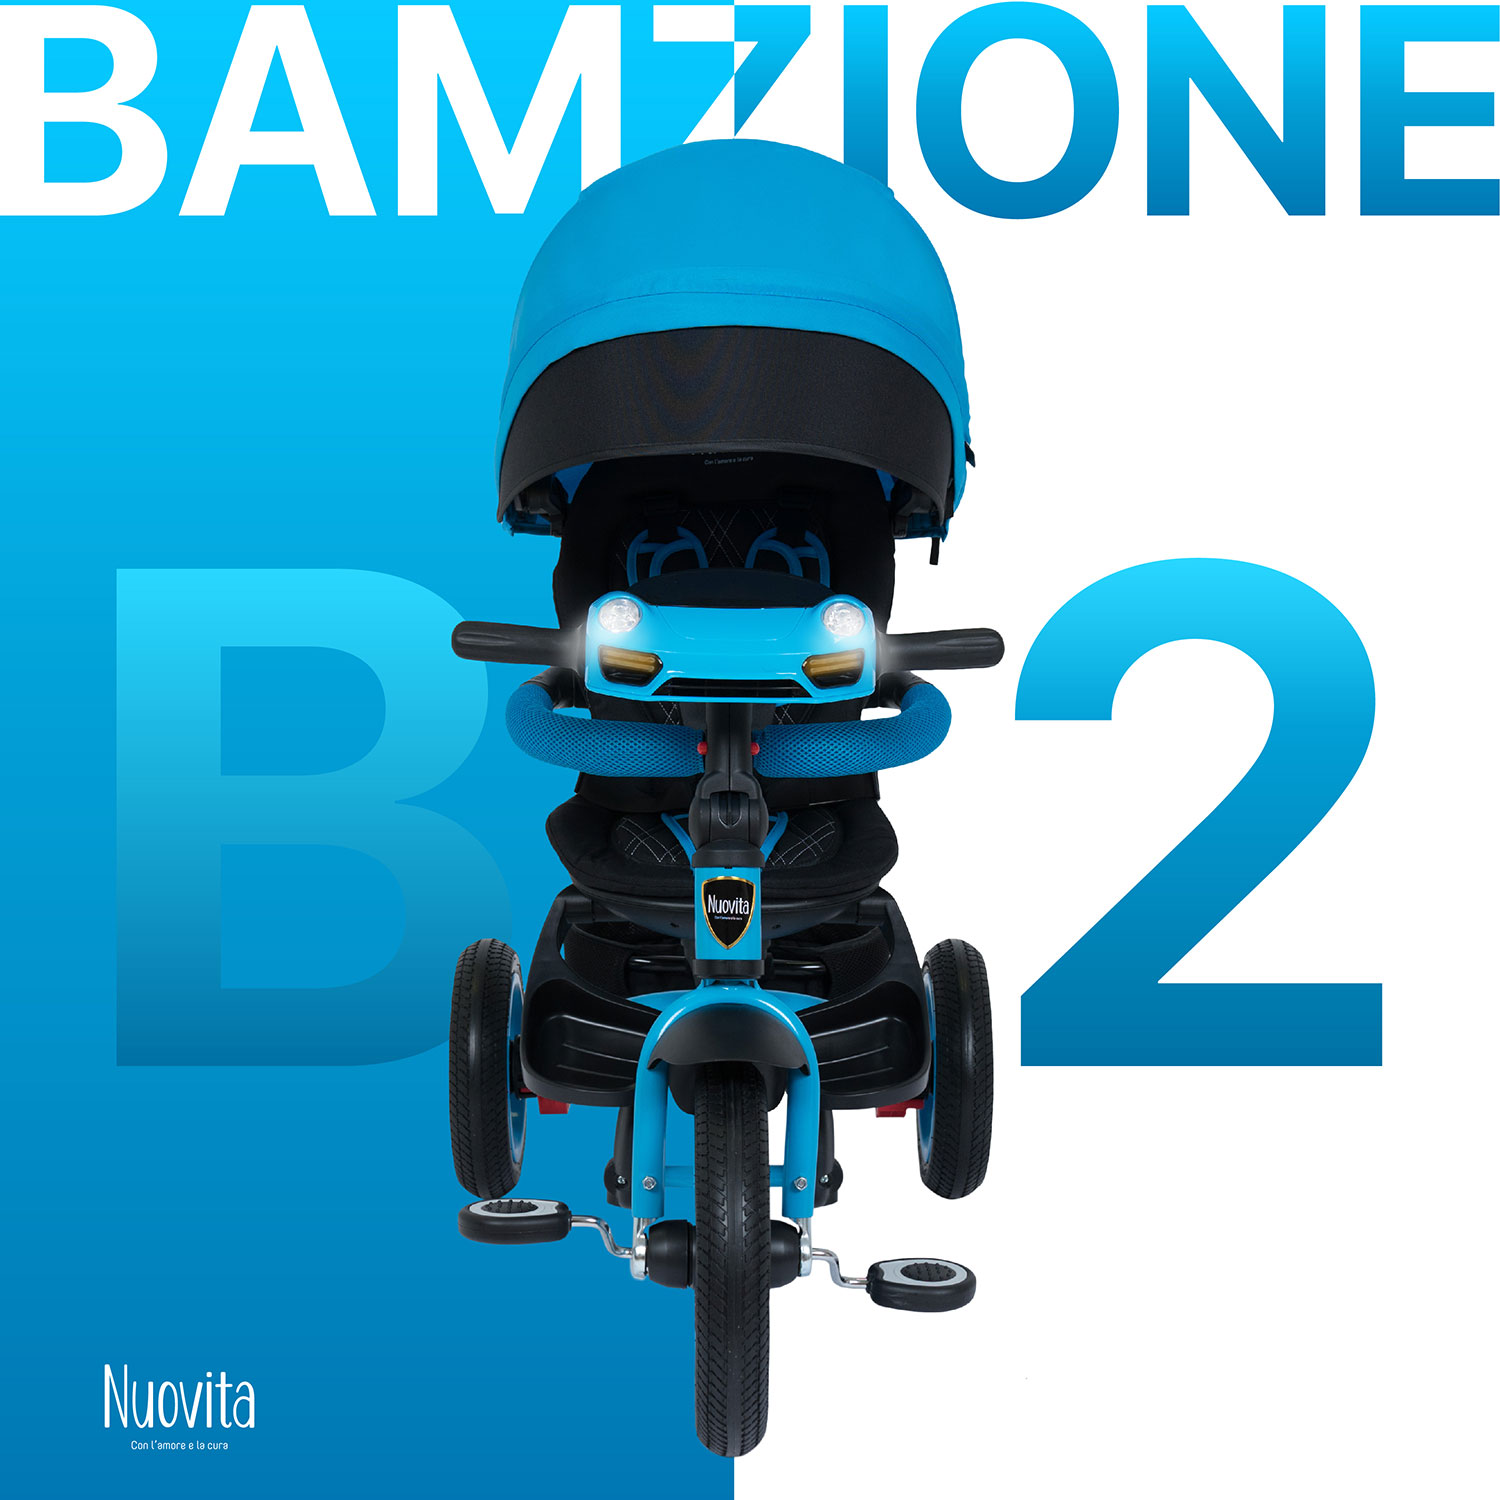 Трехколесный велосипед Nuovita Bamzione B2 Blu/Синий велосипед трехколесный nuovita bamzione b2 premio